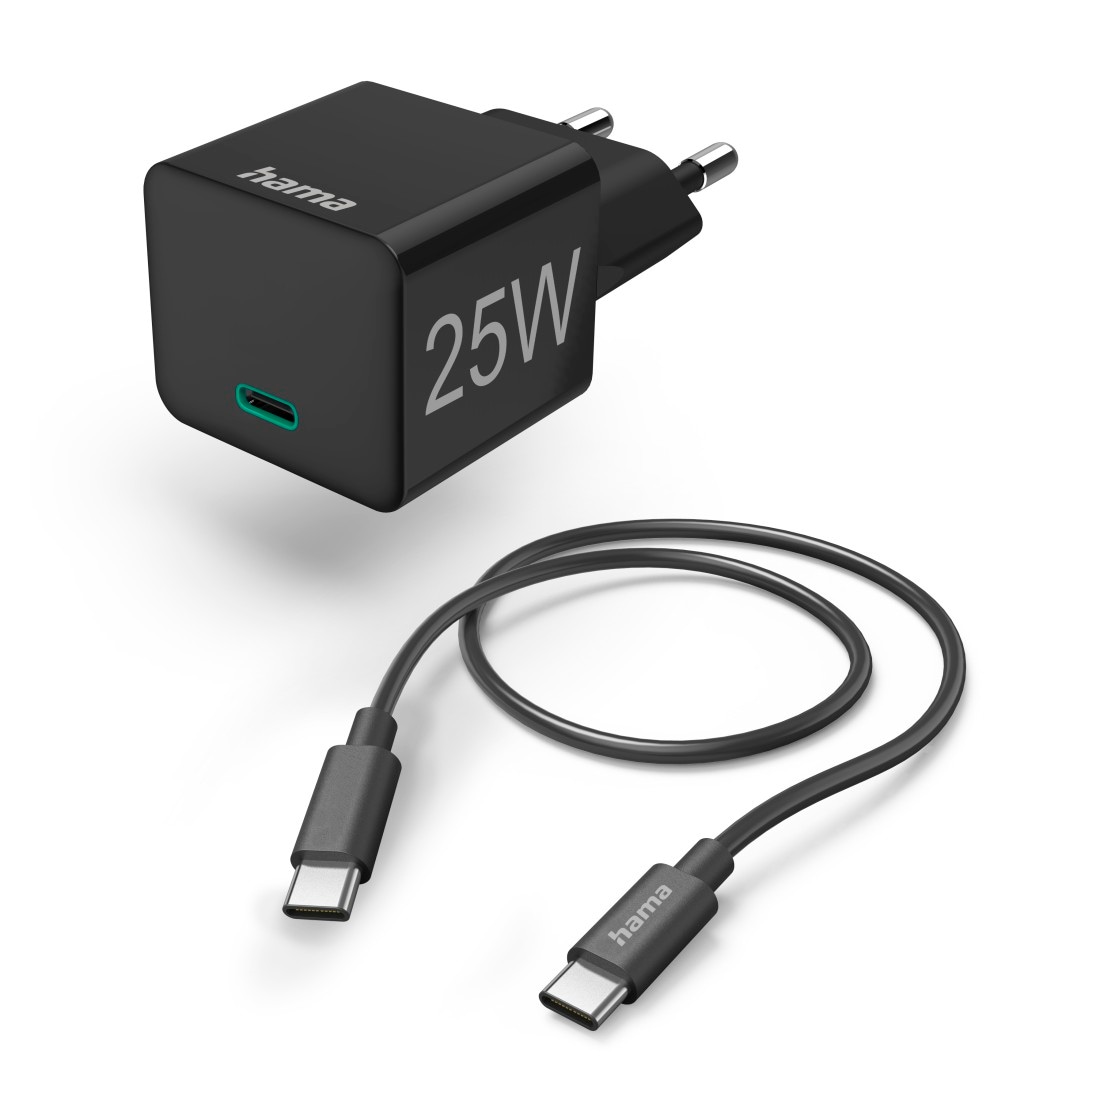 ➥ Ladeset, 25W St.) und USB Ladekabel, Jahre XXL Ladeadapter Garantie UNIVERSAL »Mini Hama PD, | Schwarz«, C, 3 (2 USB-Ladegerät